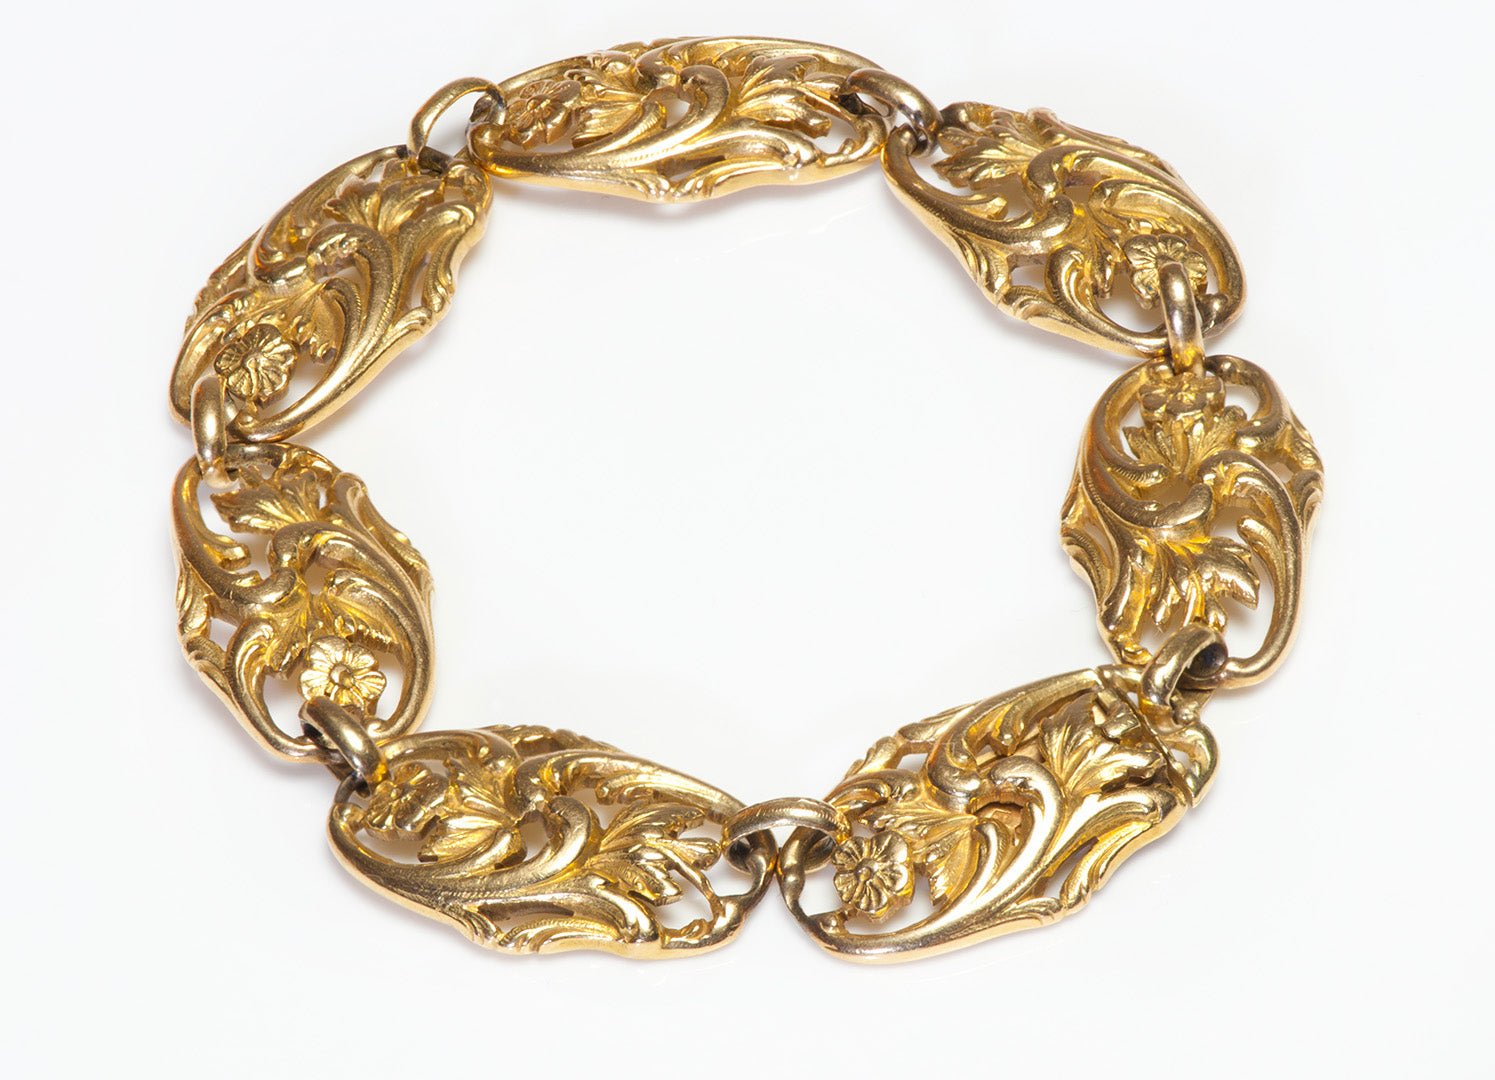 Antique French 18K Yellow Gold Bracelet